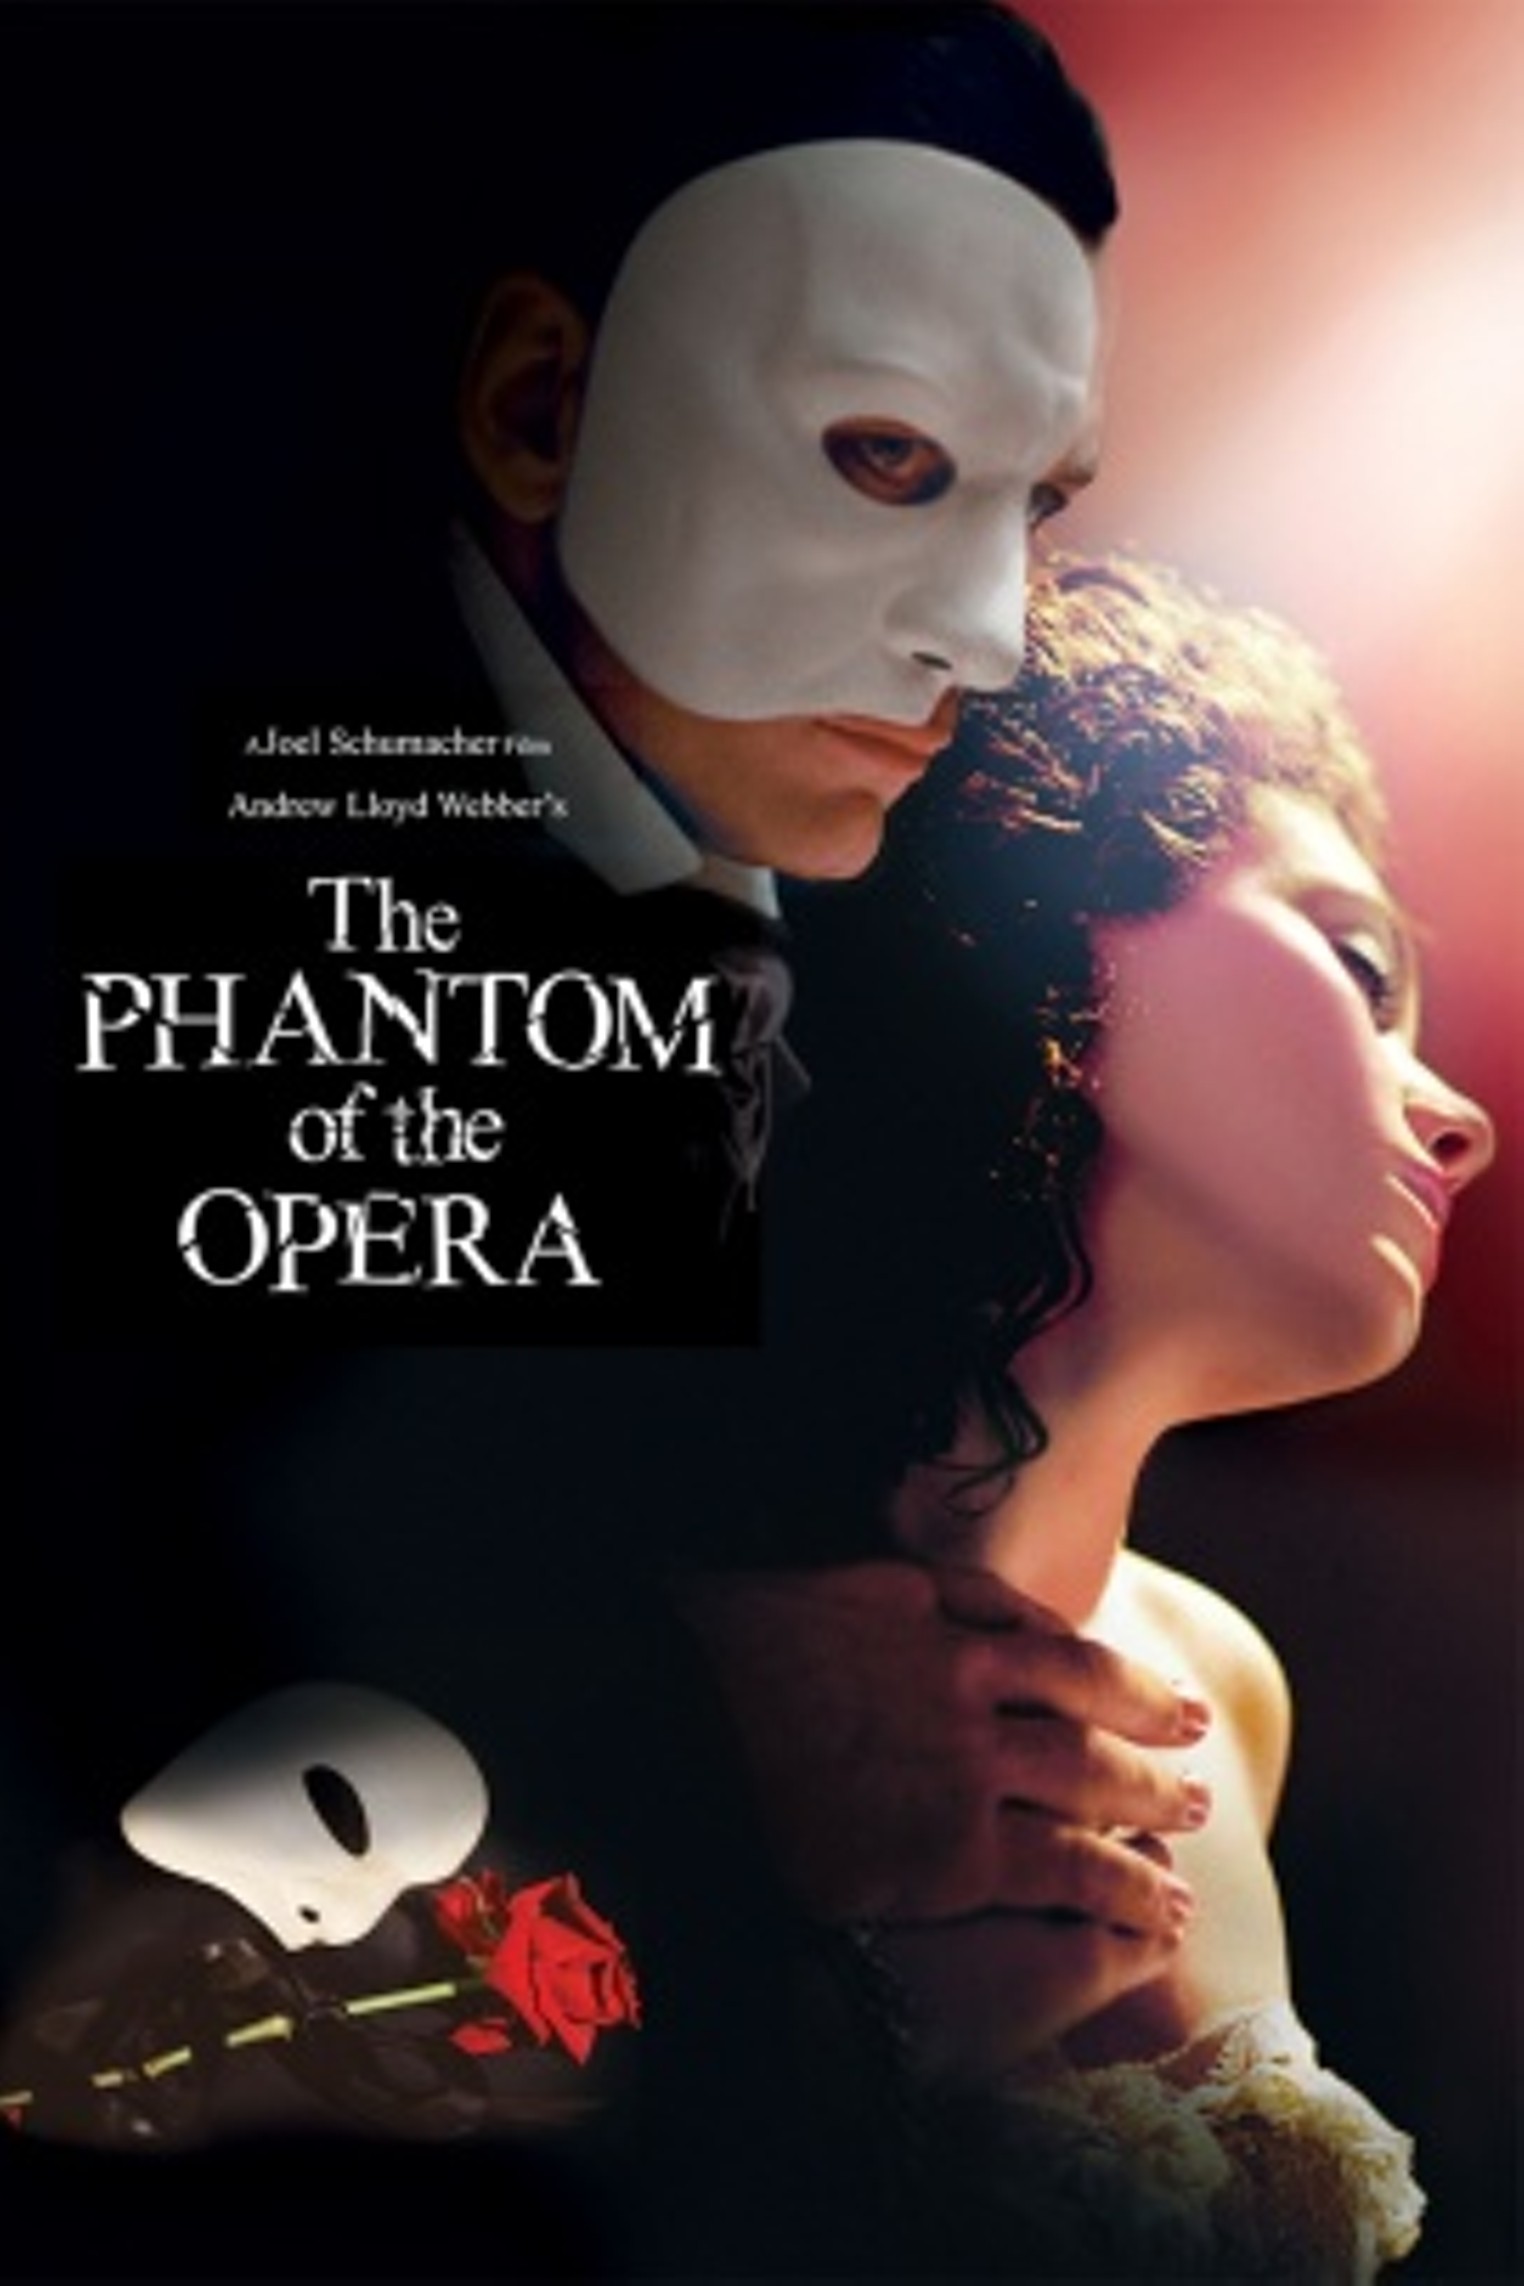 Andrew Lloyd Webber's The Phantom of the Opera Houston Press The